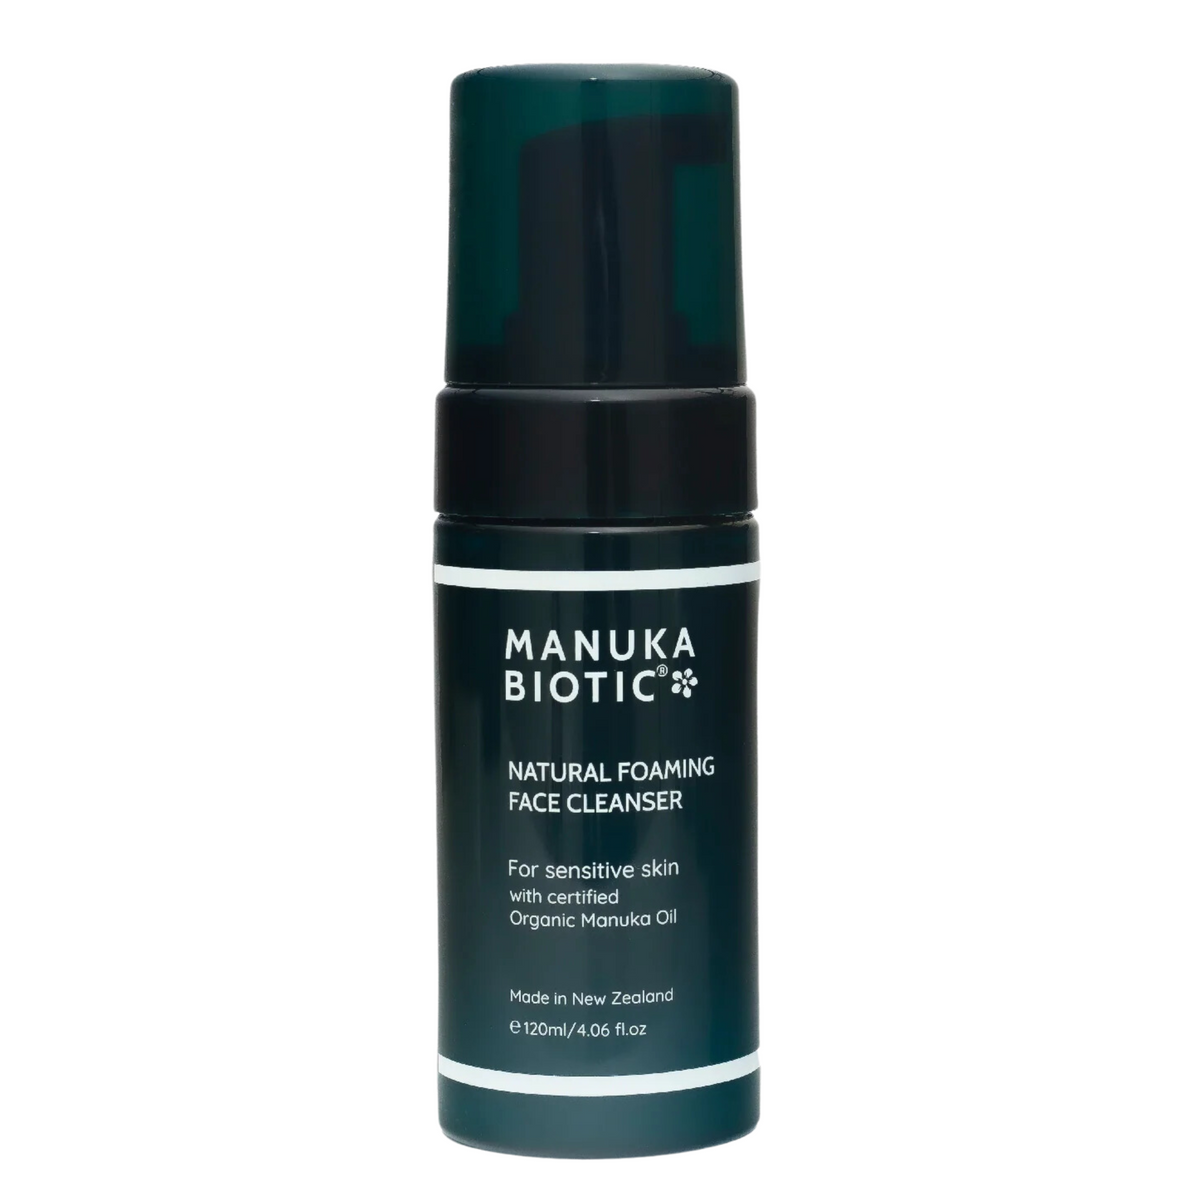 Manuka Biotic - Foaming Face Cleanser